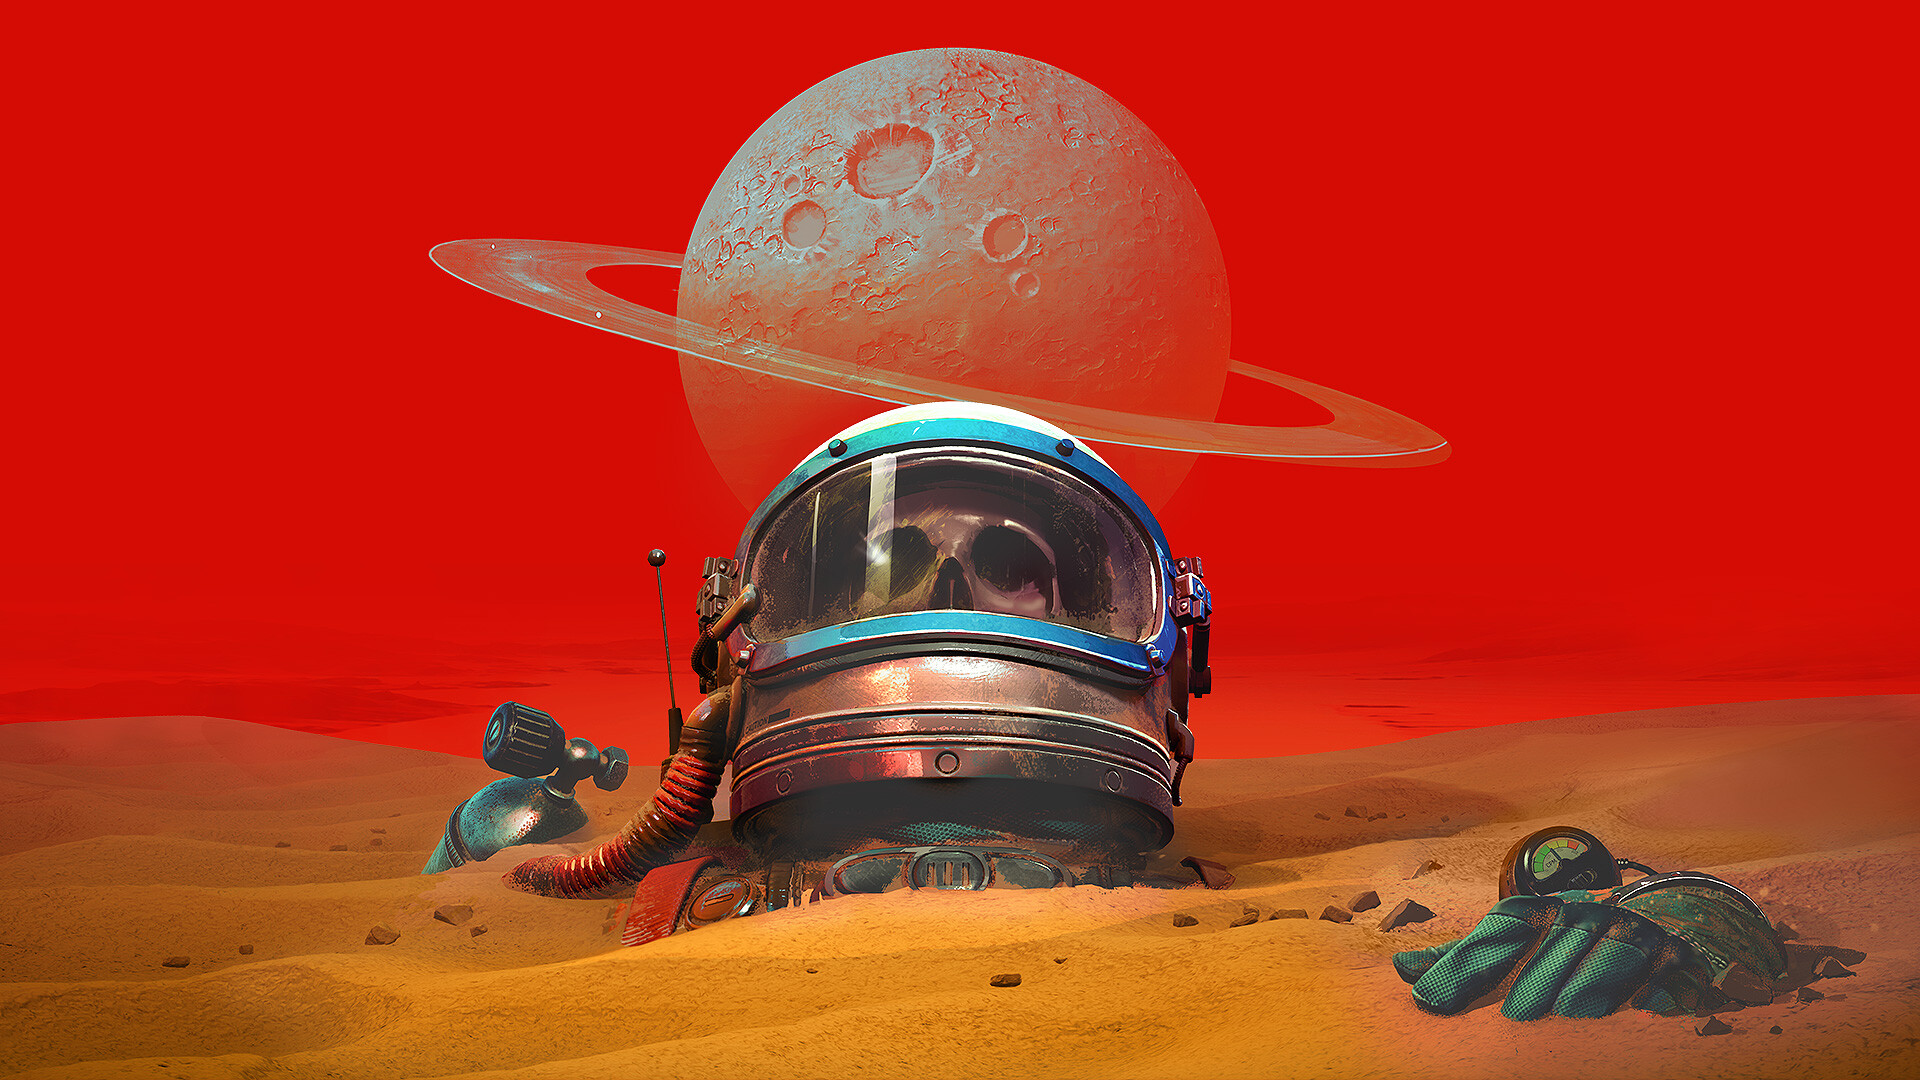 General 1920x1080 skull astronaut gloves planet sand digital art The Invincible simple background helmet red background minimalism